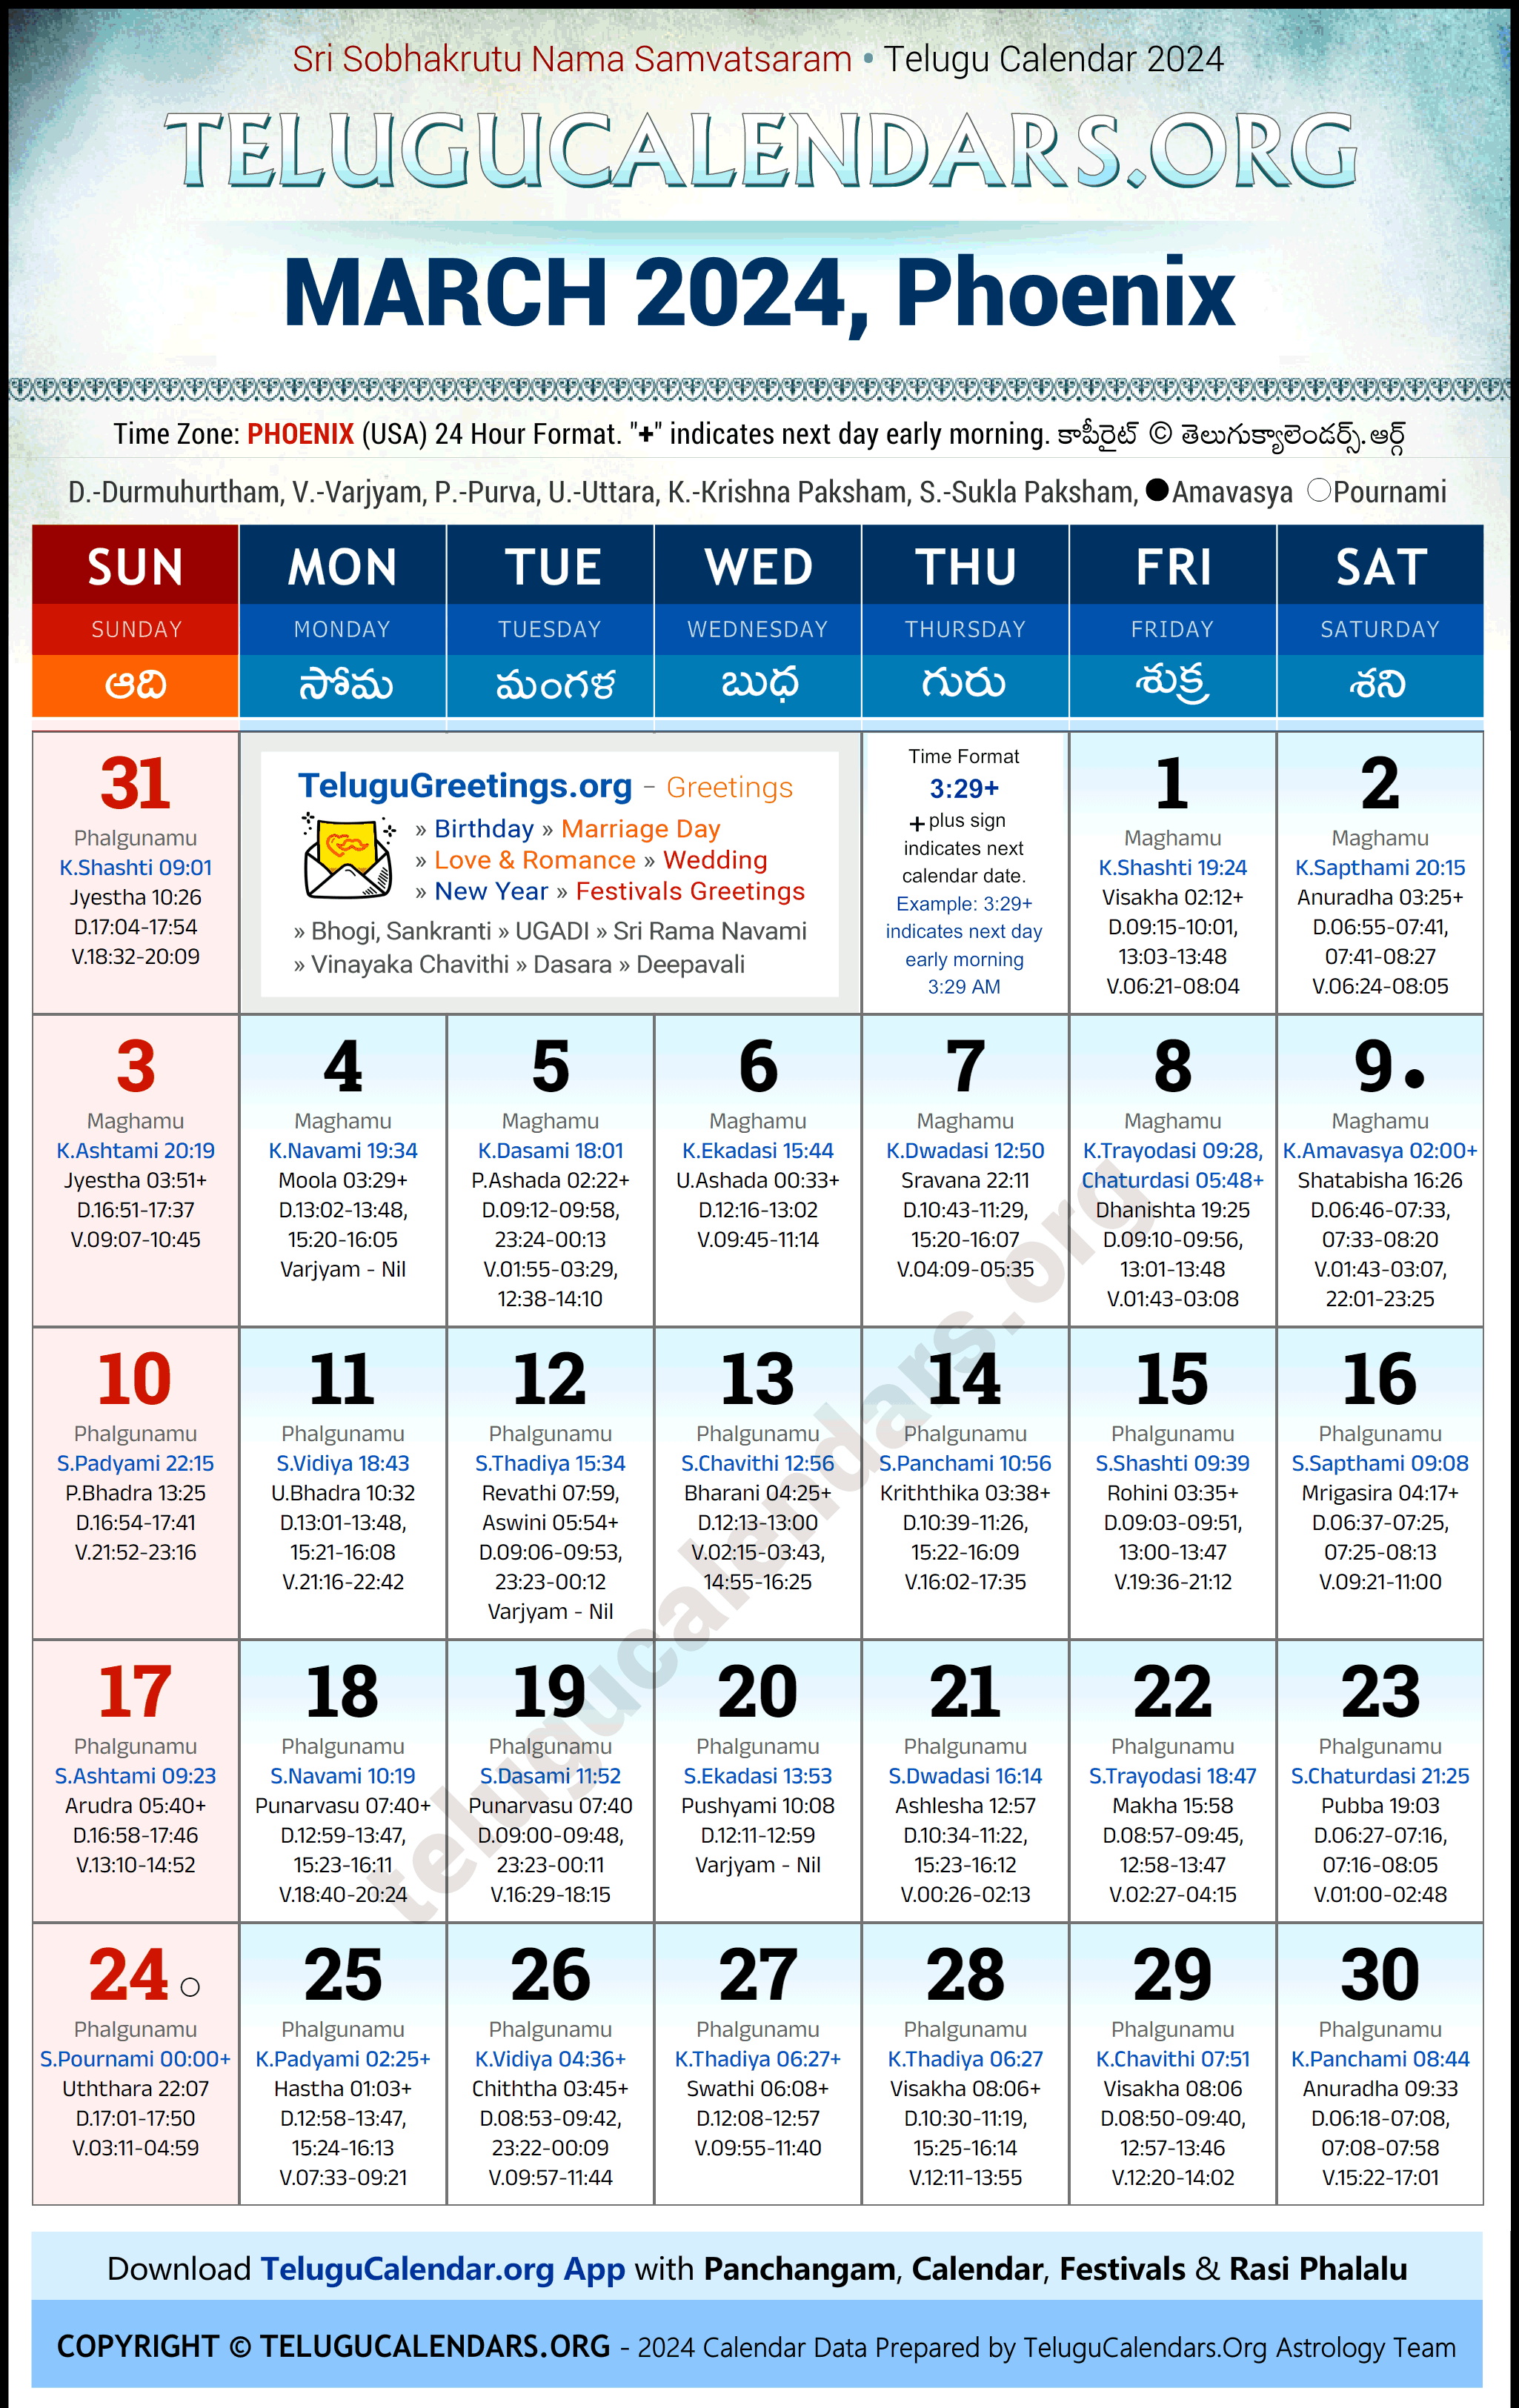 Telugu Calendar 2024 March Festivals for Phoenix